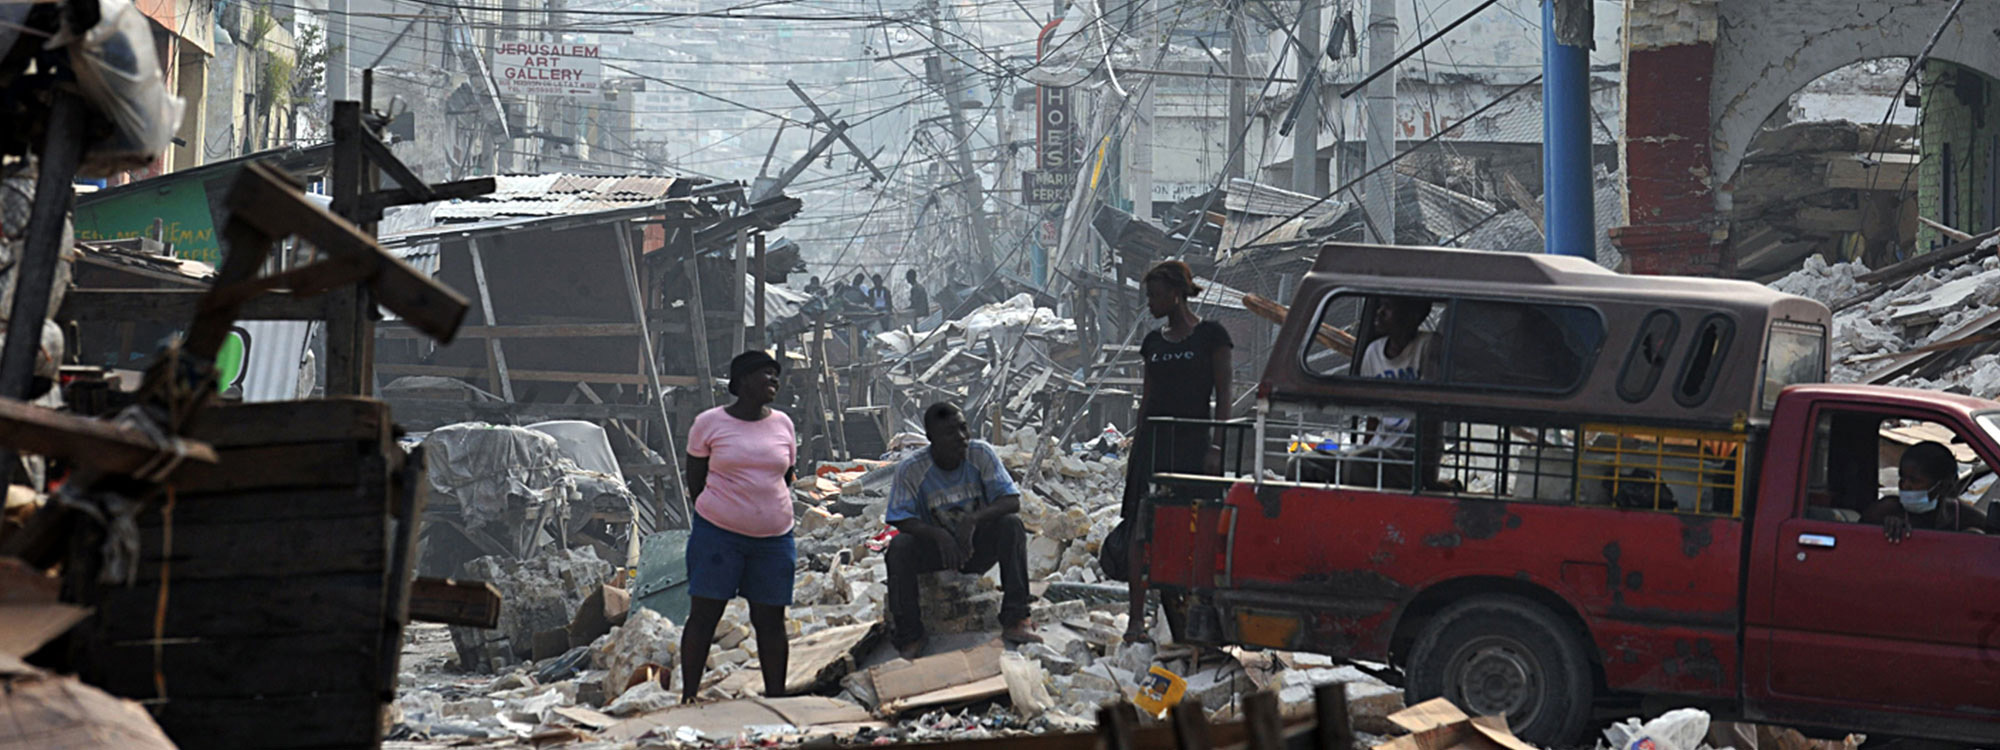 People among earthquake damaged buildings in Haiti